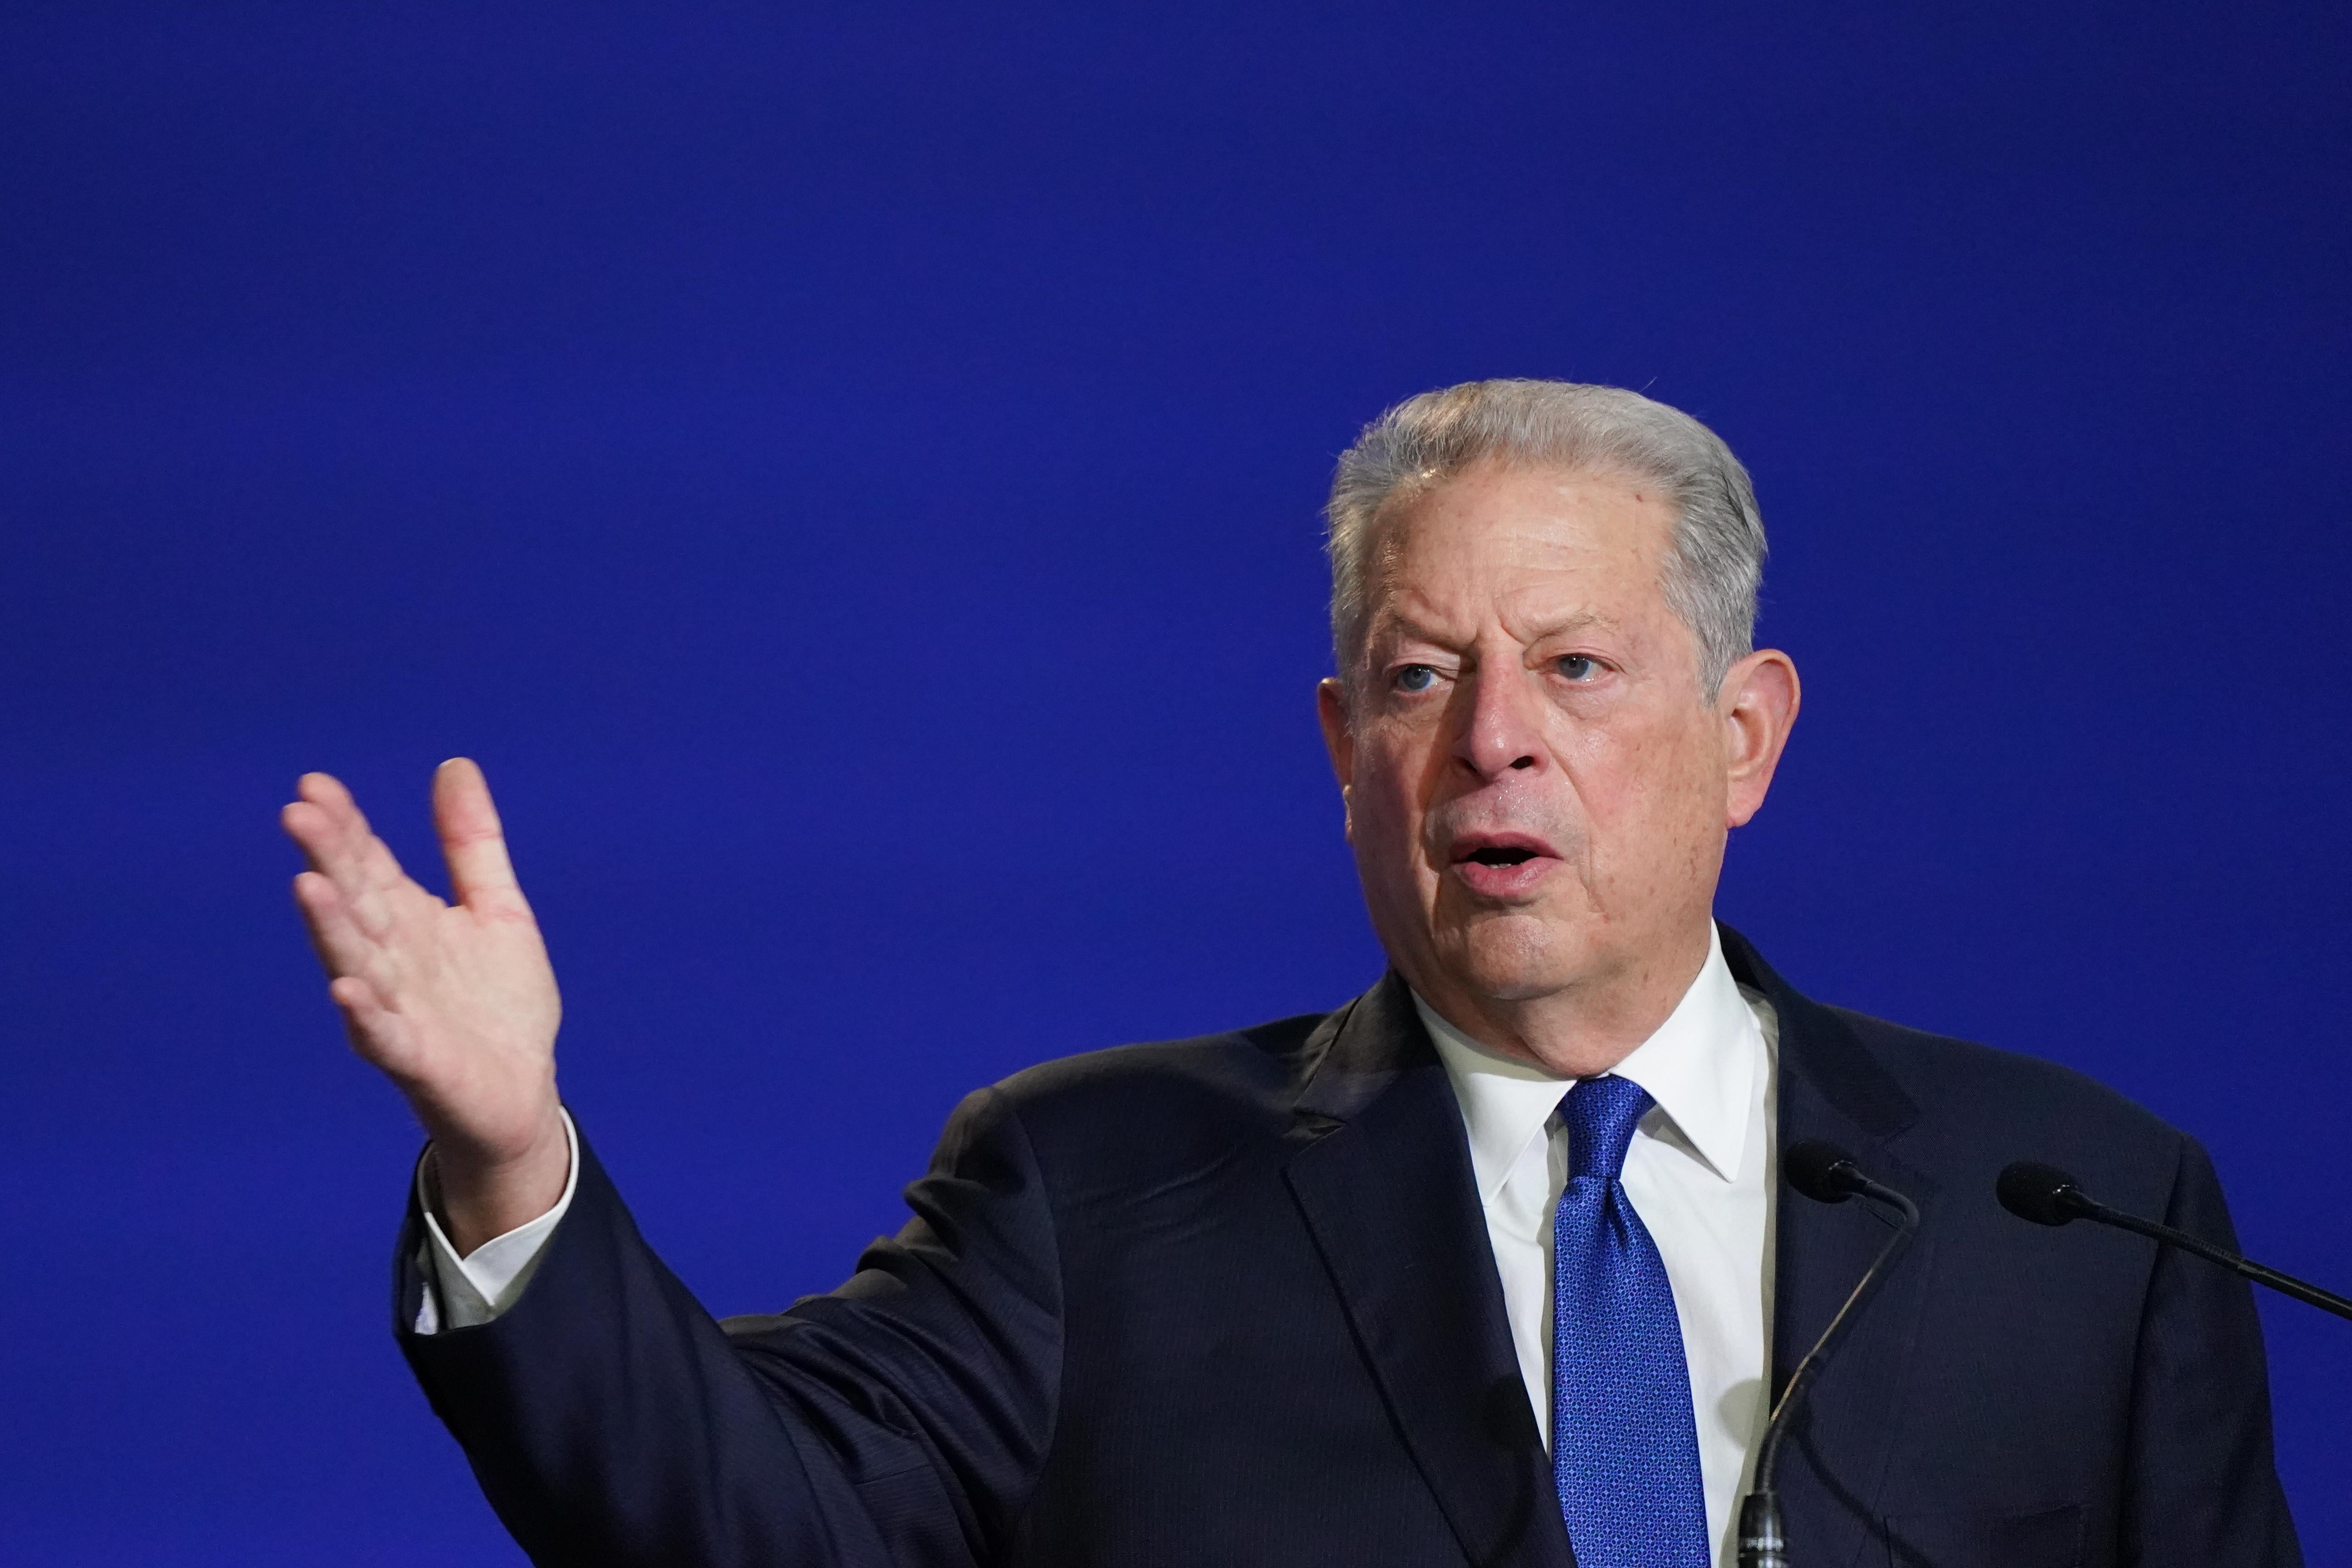 Al Gore speaking and raising his right hand